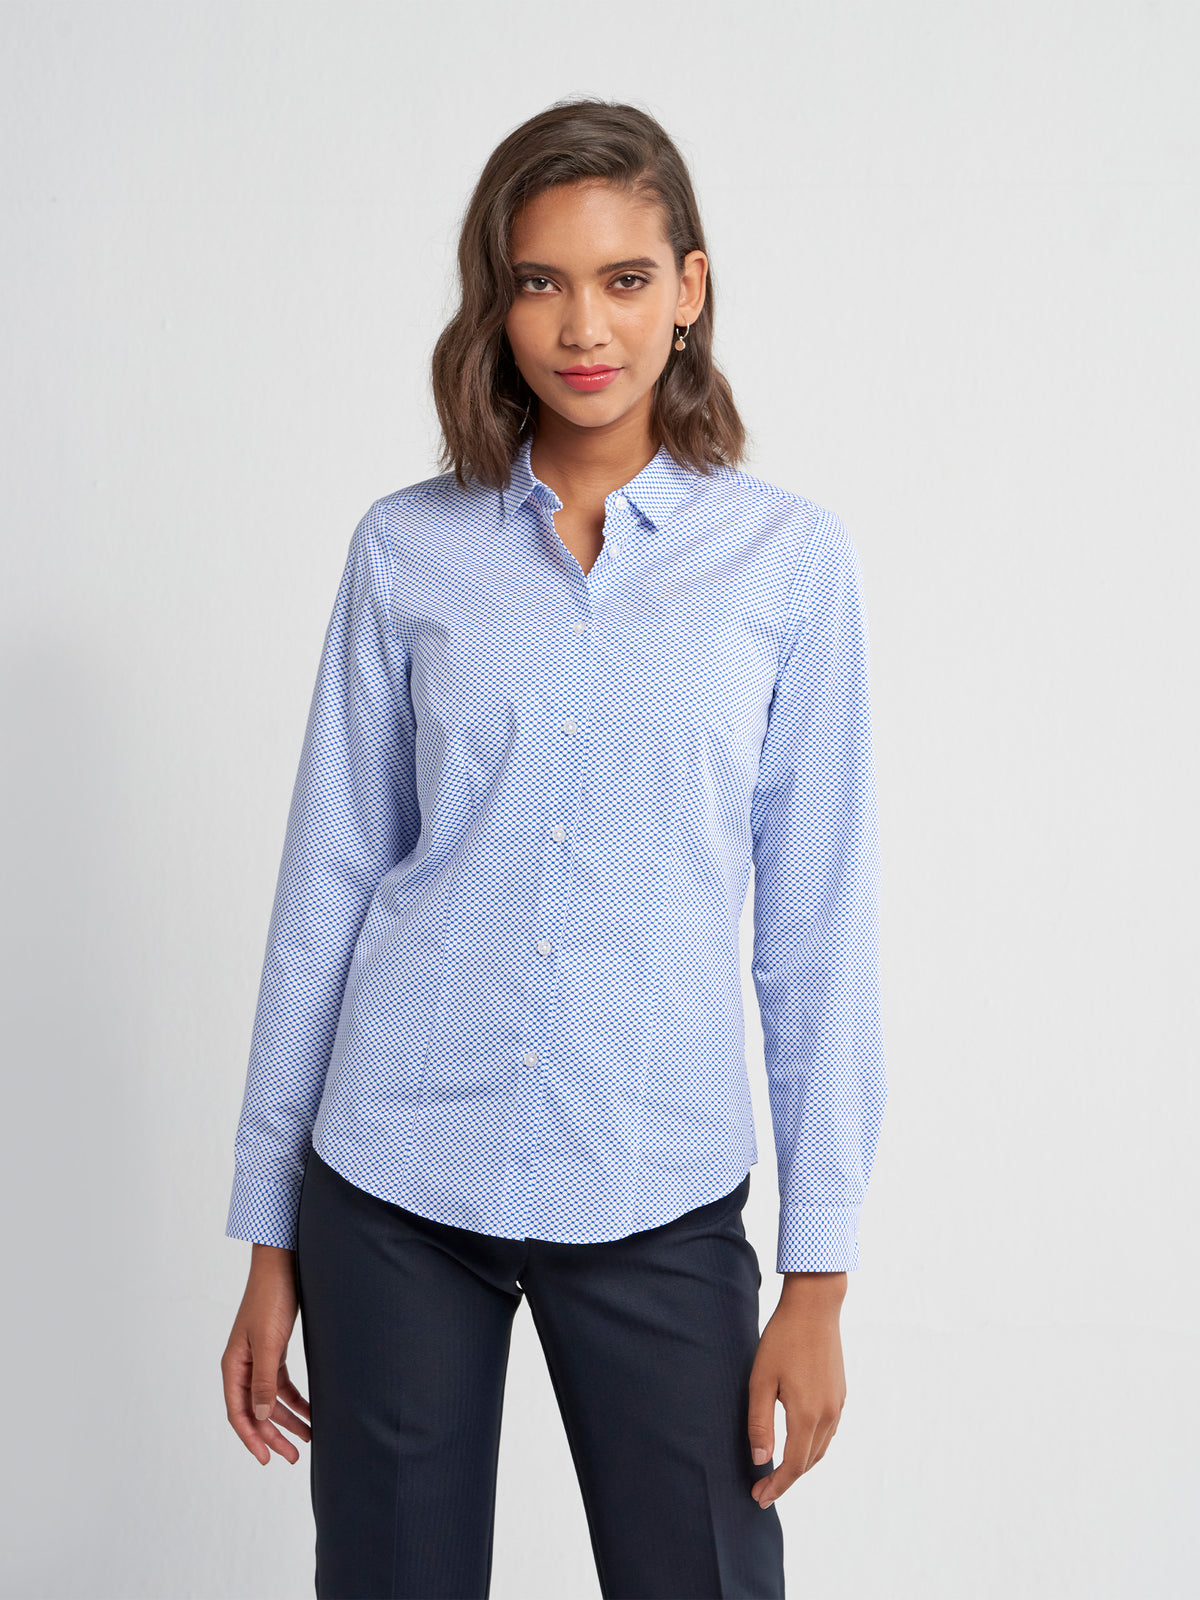 Karabo cotton shirt - blue circle print